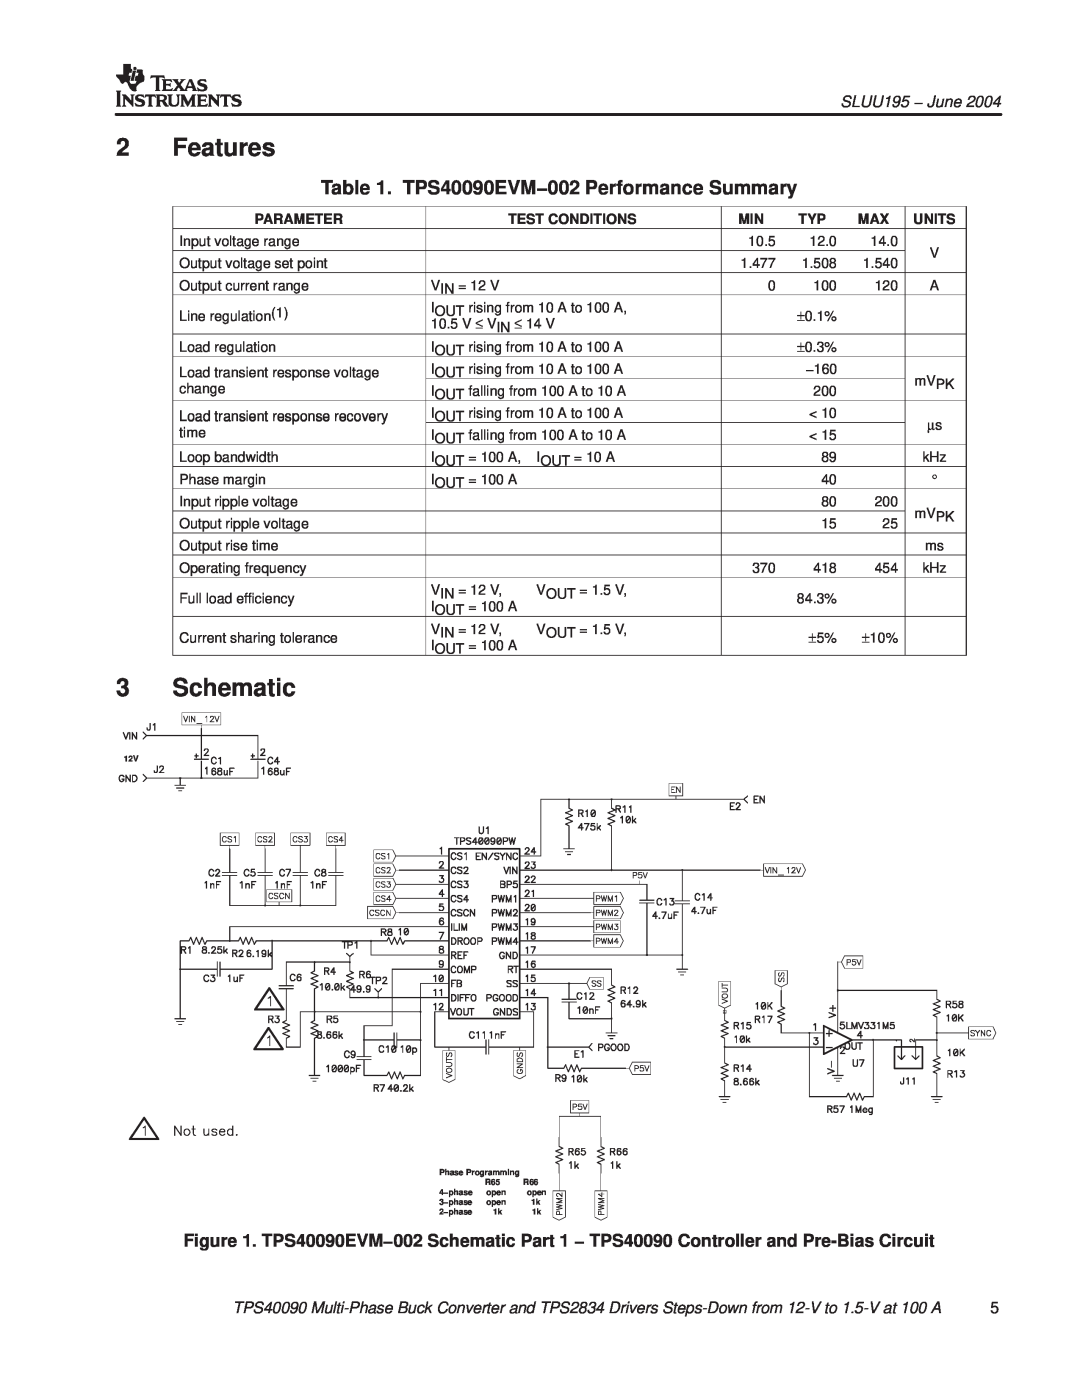 Texas Instruments TPS40090EVM-002 manual Features, Schematic, TPS40090EVM−002 Performance Summary, SLUU195 − June 